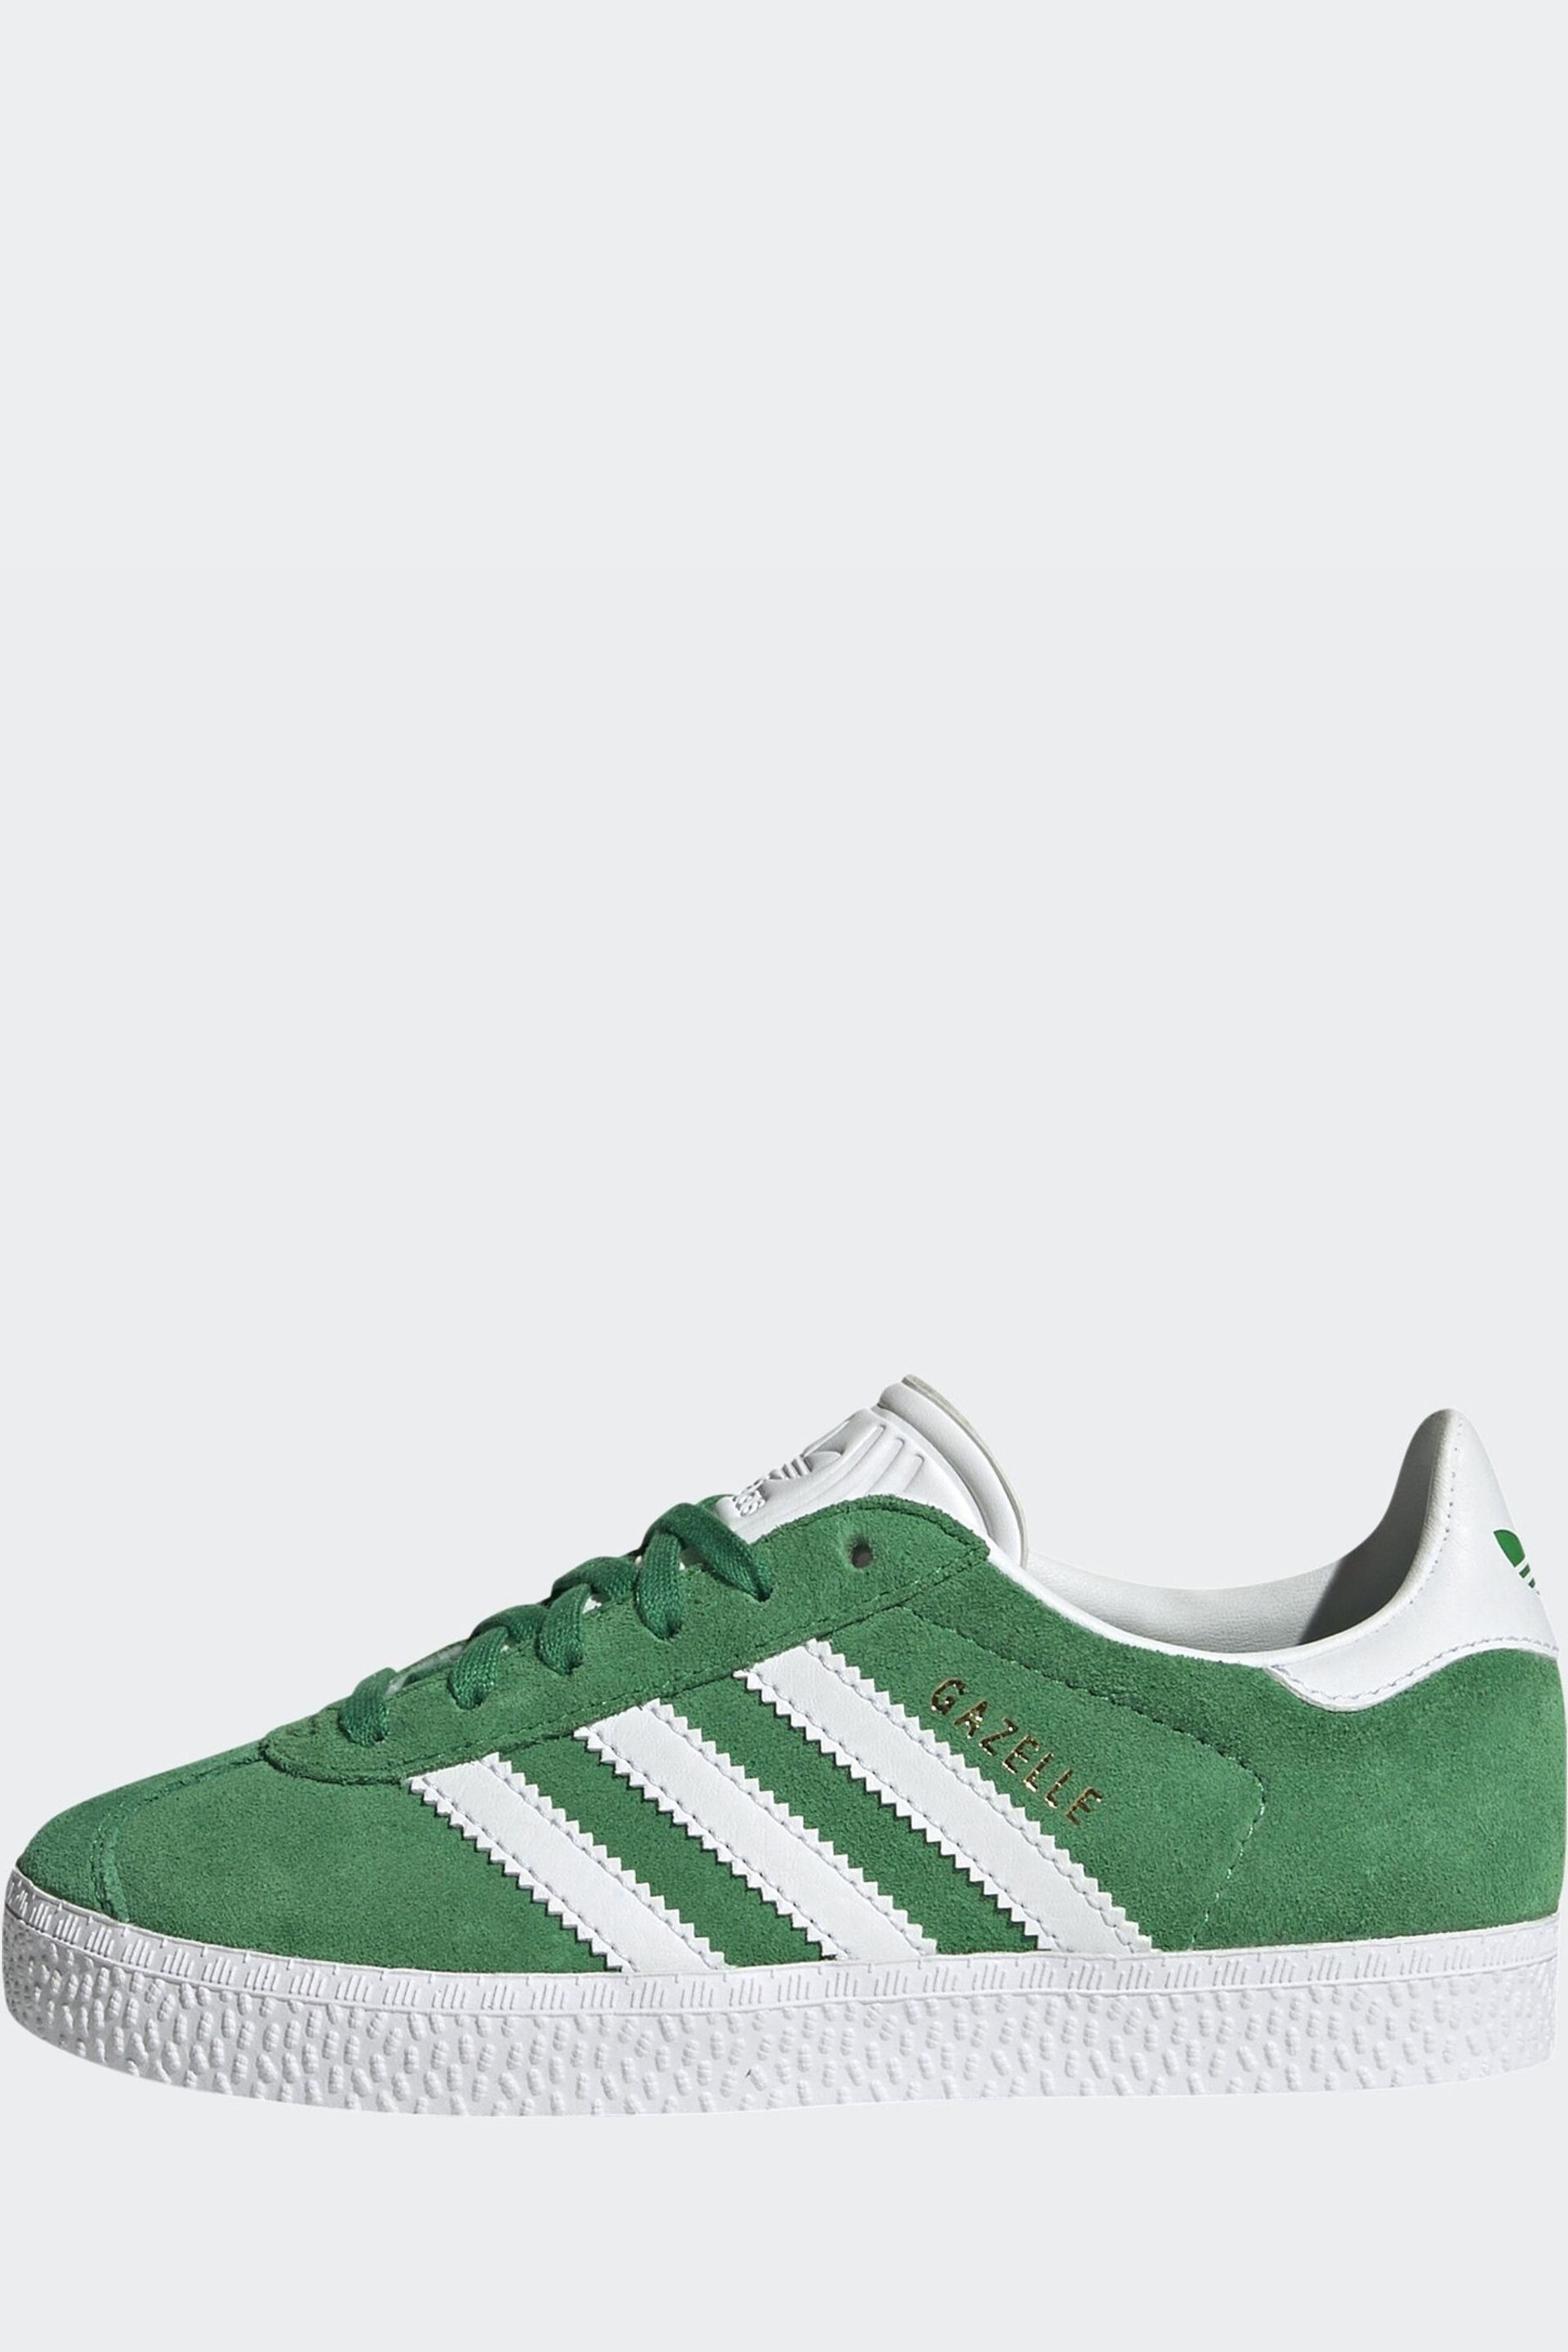 adidas Green Gazelle Shoes - Image 9 of 13